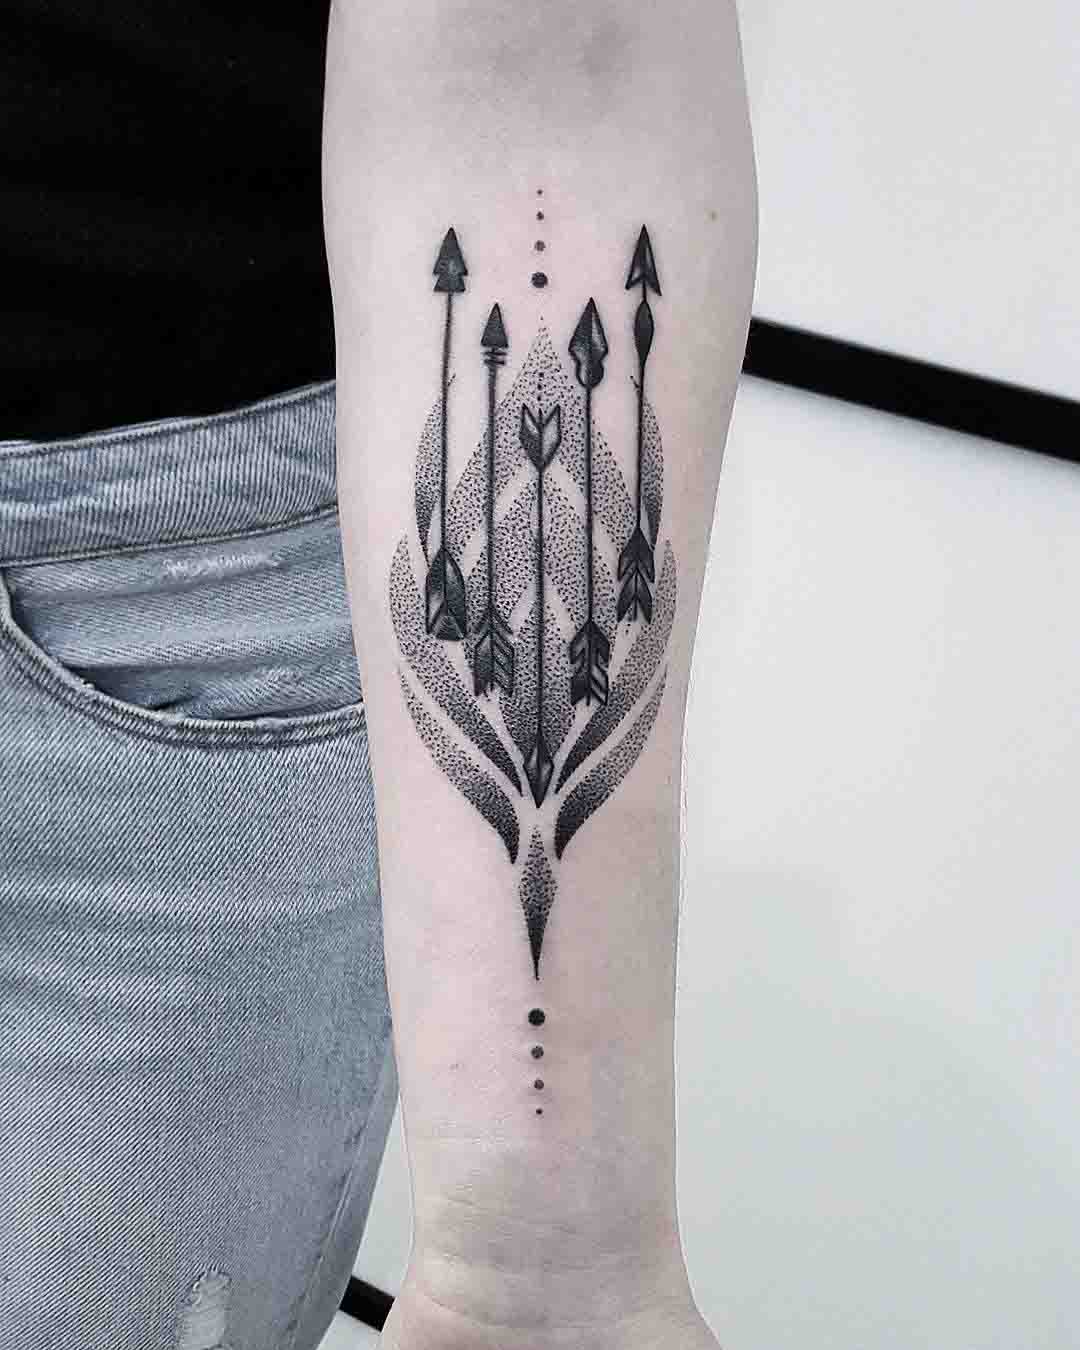 Five Arrows Tattoo Dotwork - Best Tattoo Ideas Gallery